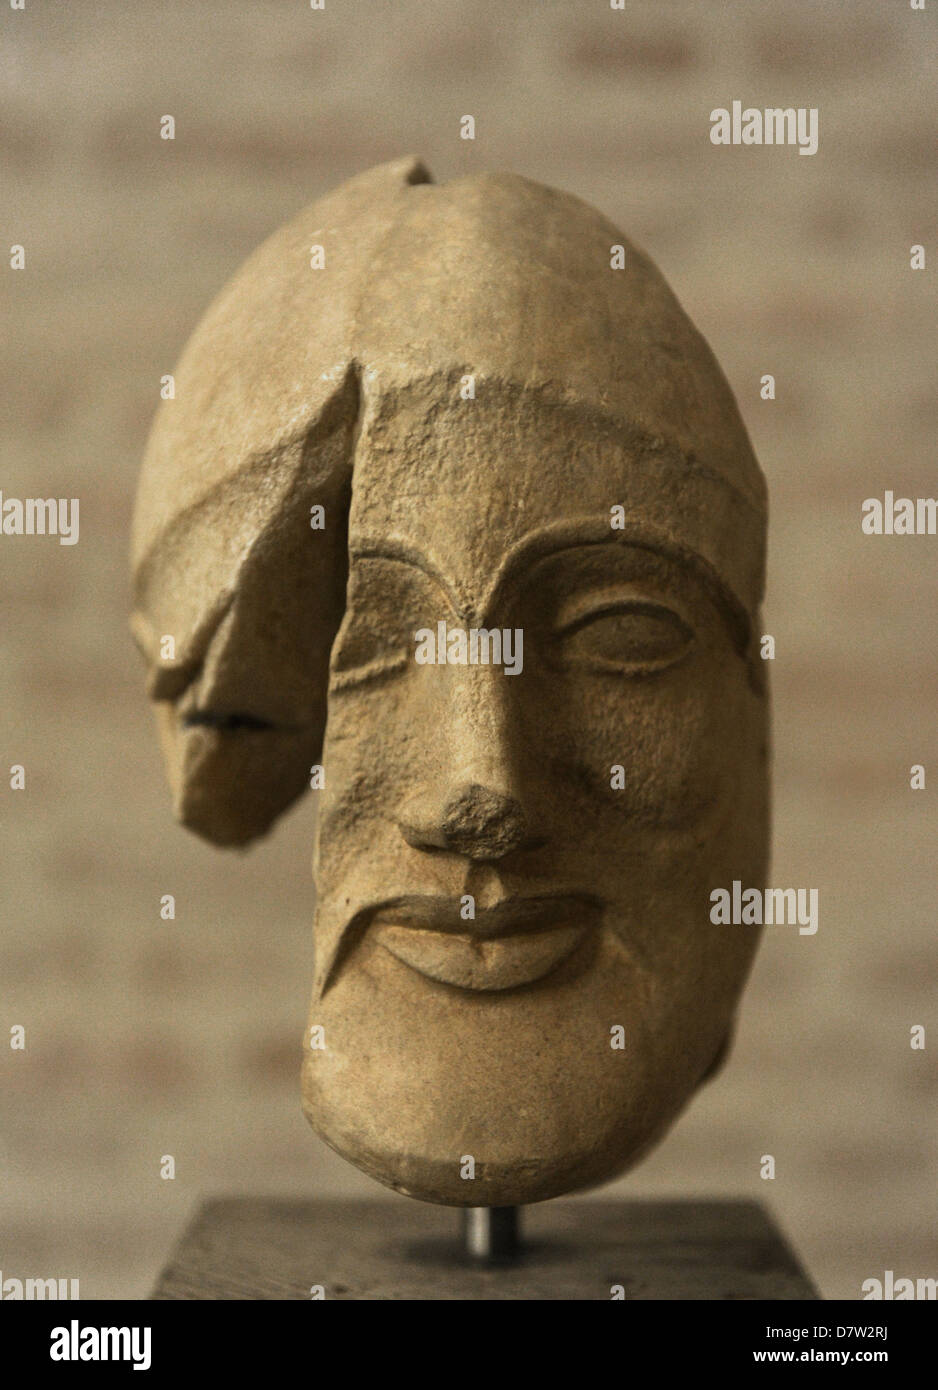 Greek sculpture aegina hi-res stock photography and images - Alamy